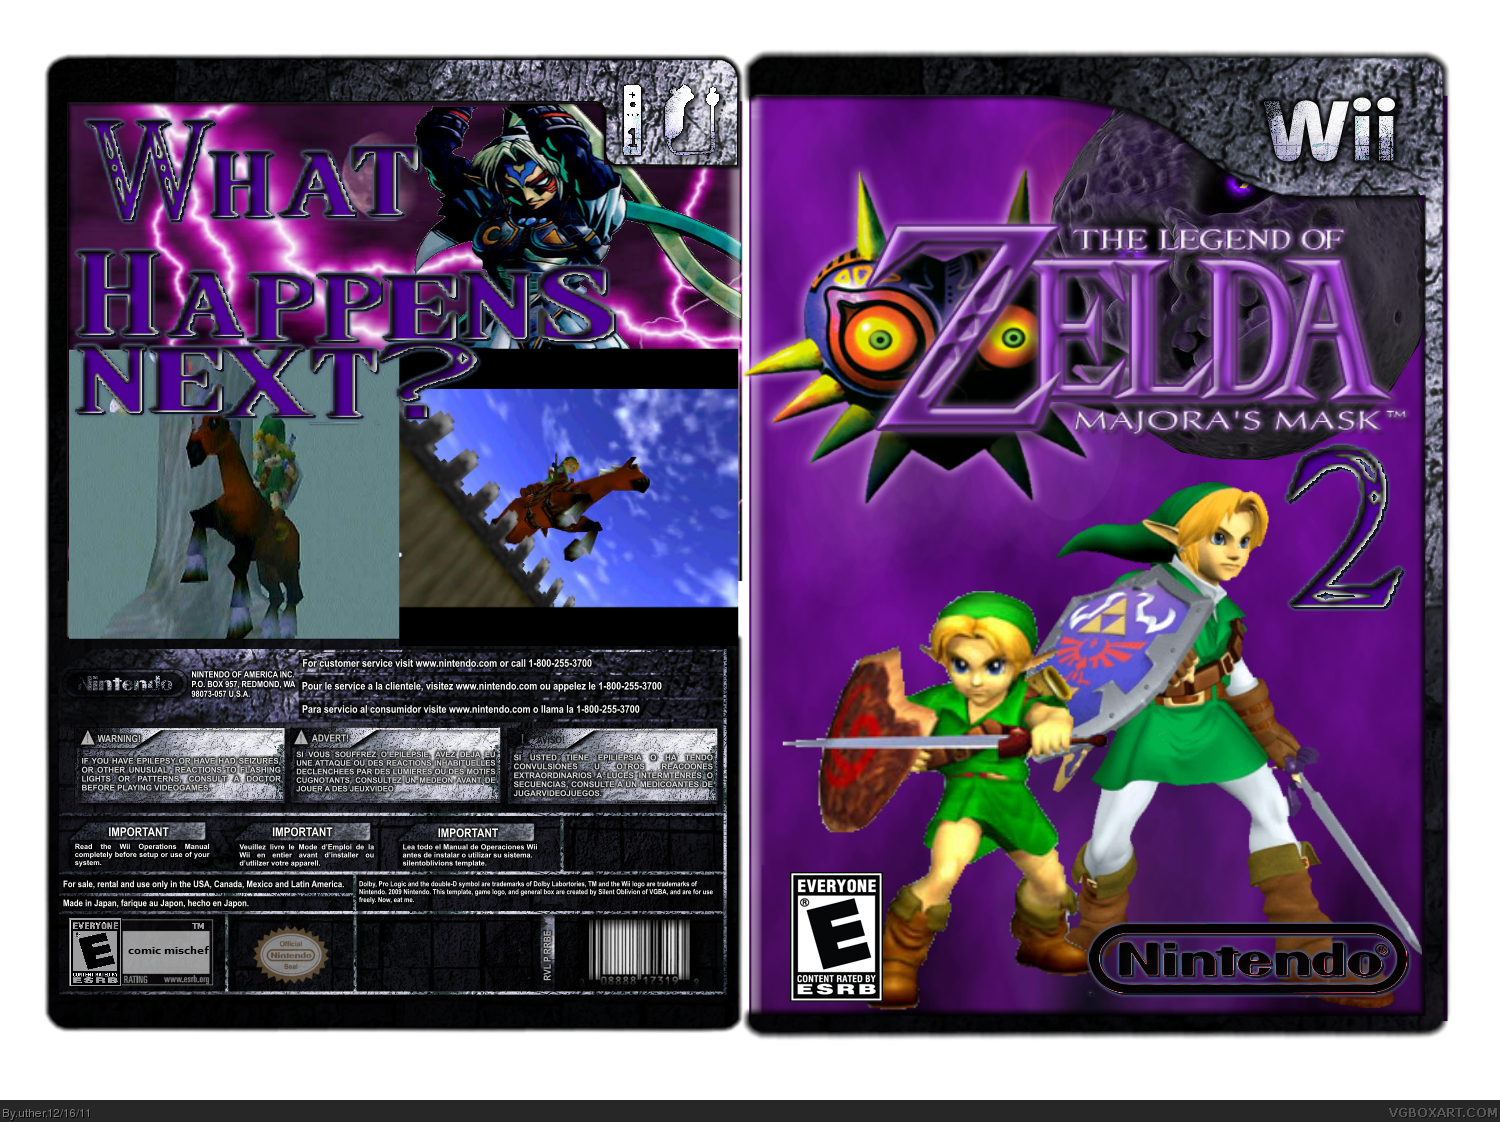 The Legend of Zelda: Majora's Mask 2 box cover